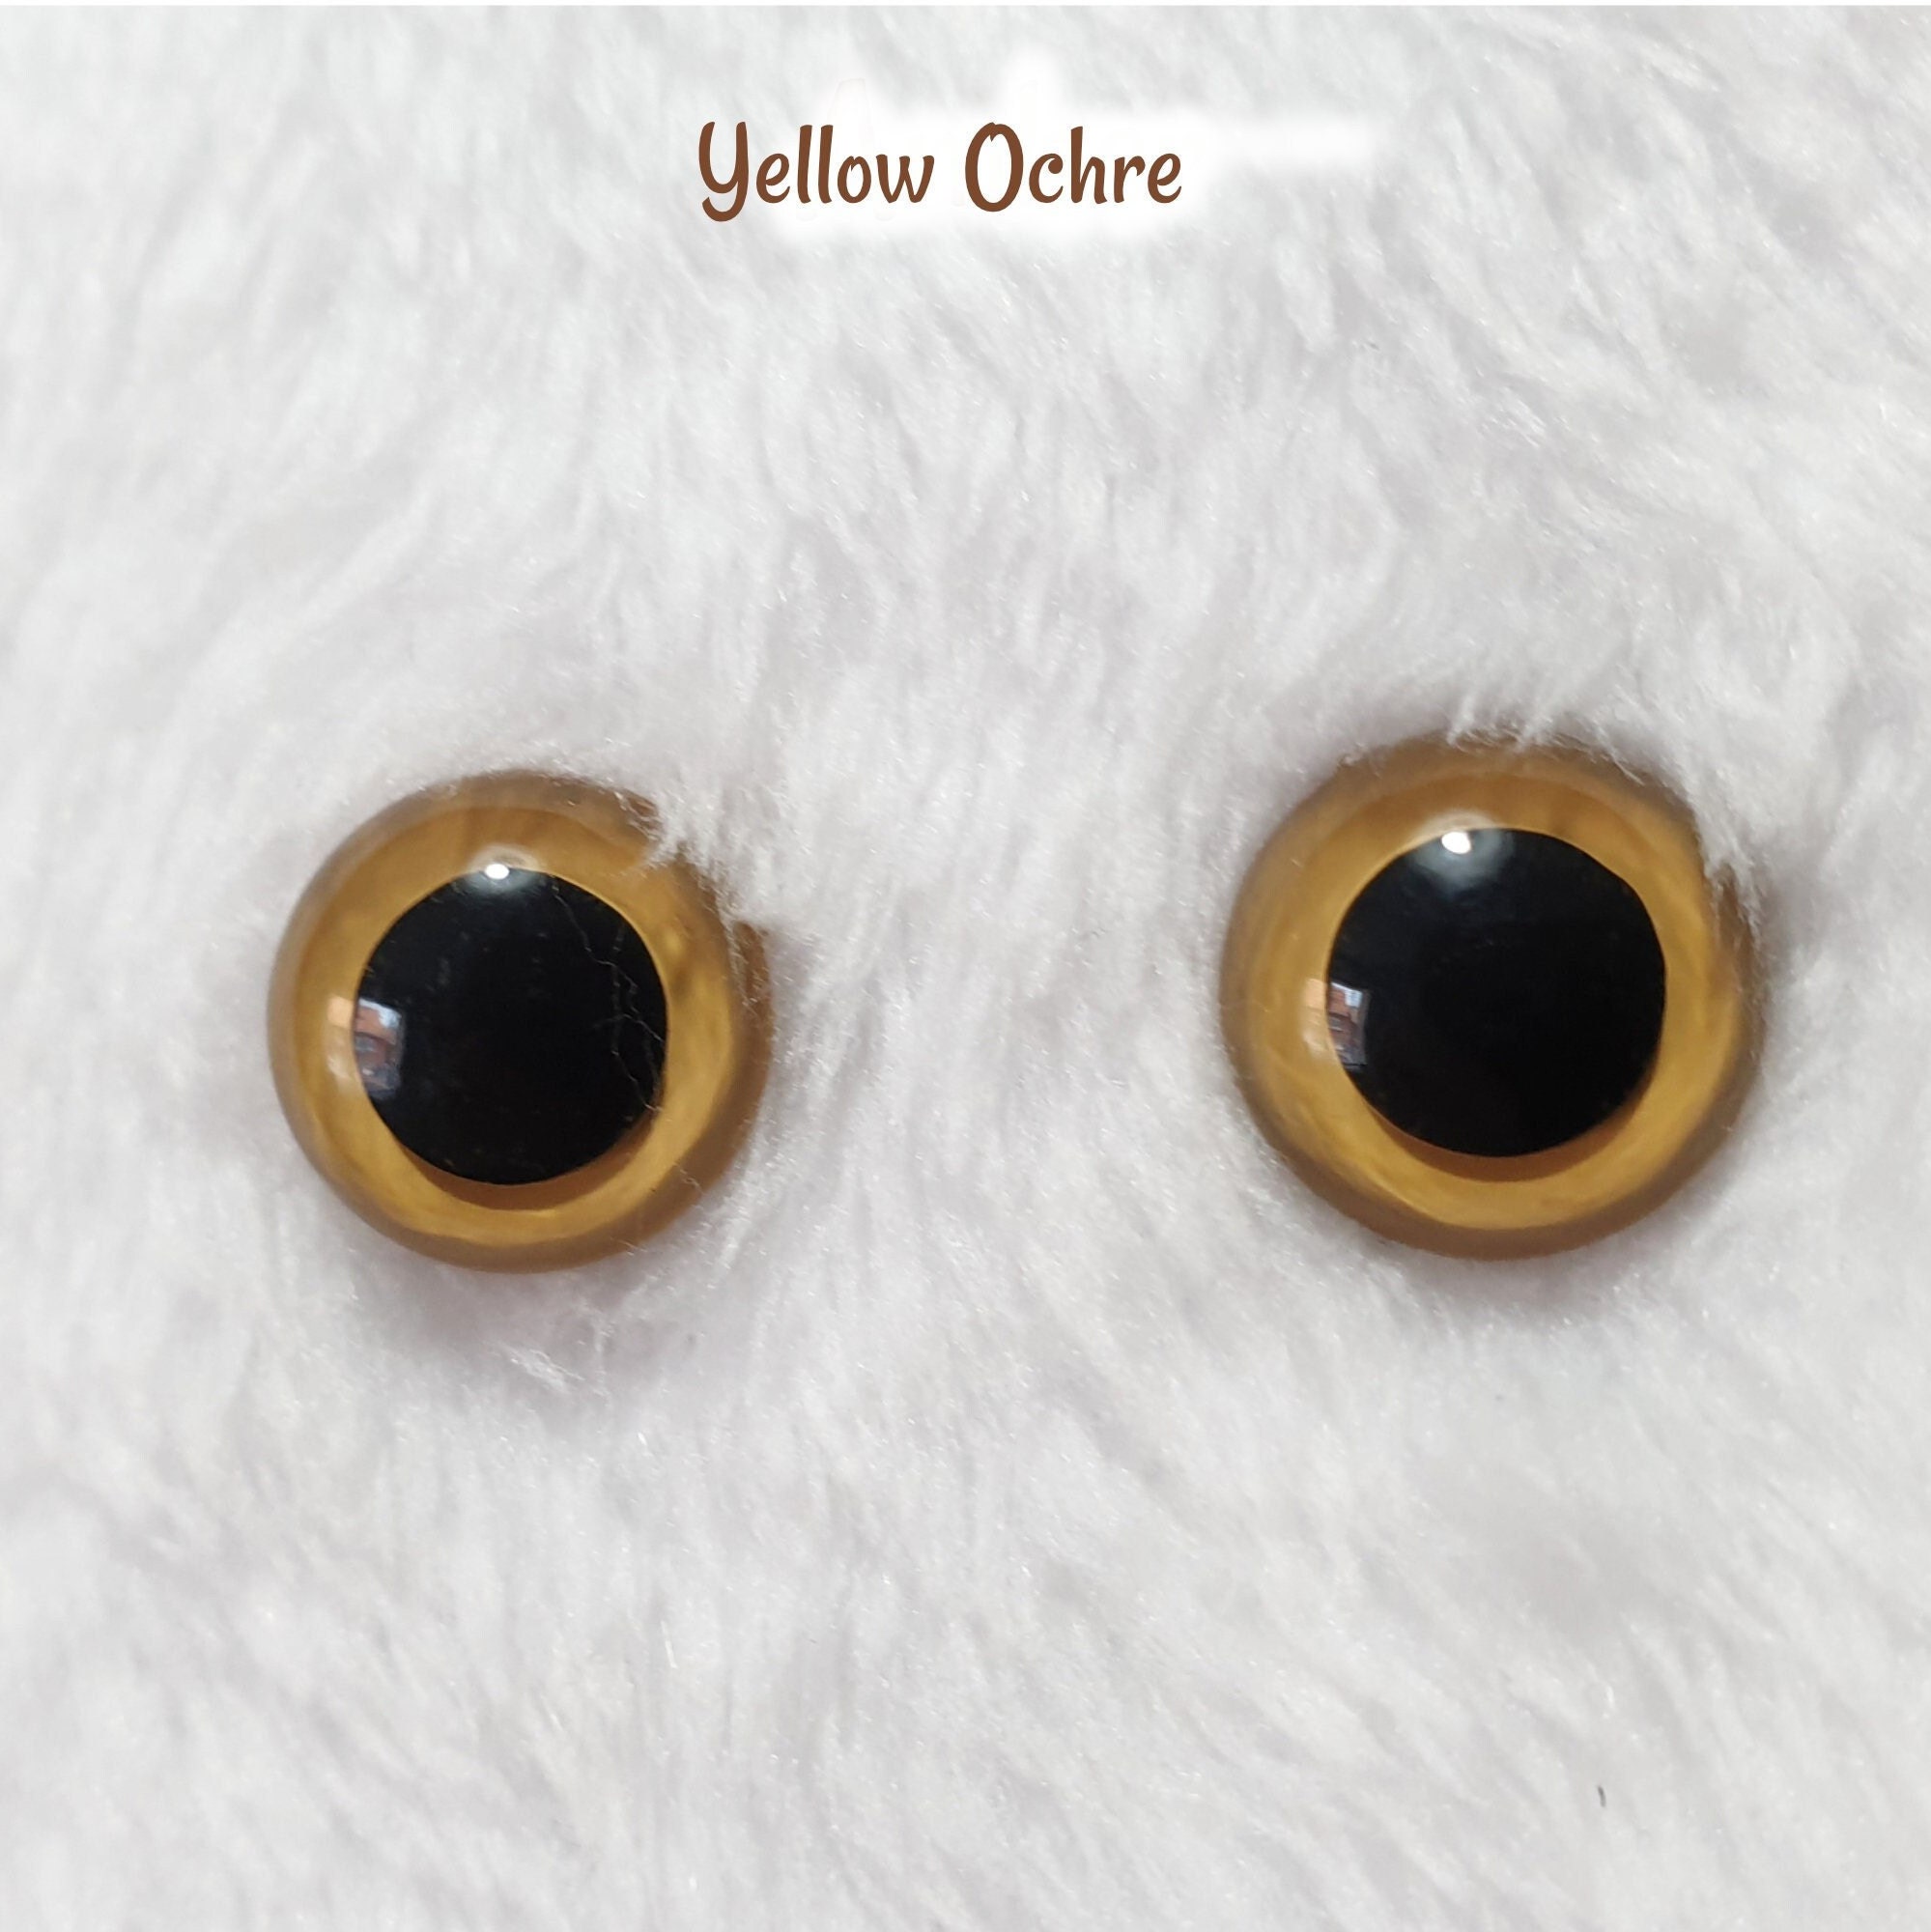 9 Mm Amigurumi Eyes Animal Eyes Craft Plastic Eyes Safety Eyes 10 PAIRS  Sampler Mixed Colors 9A 